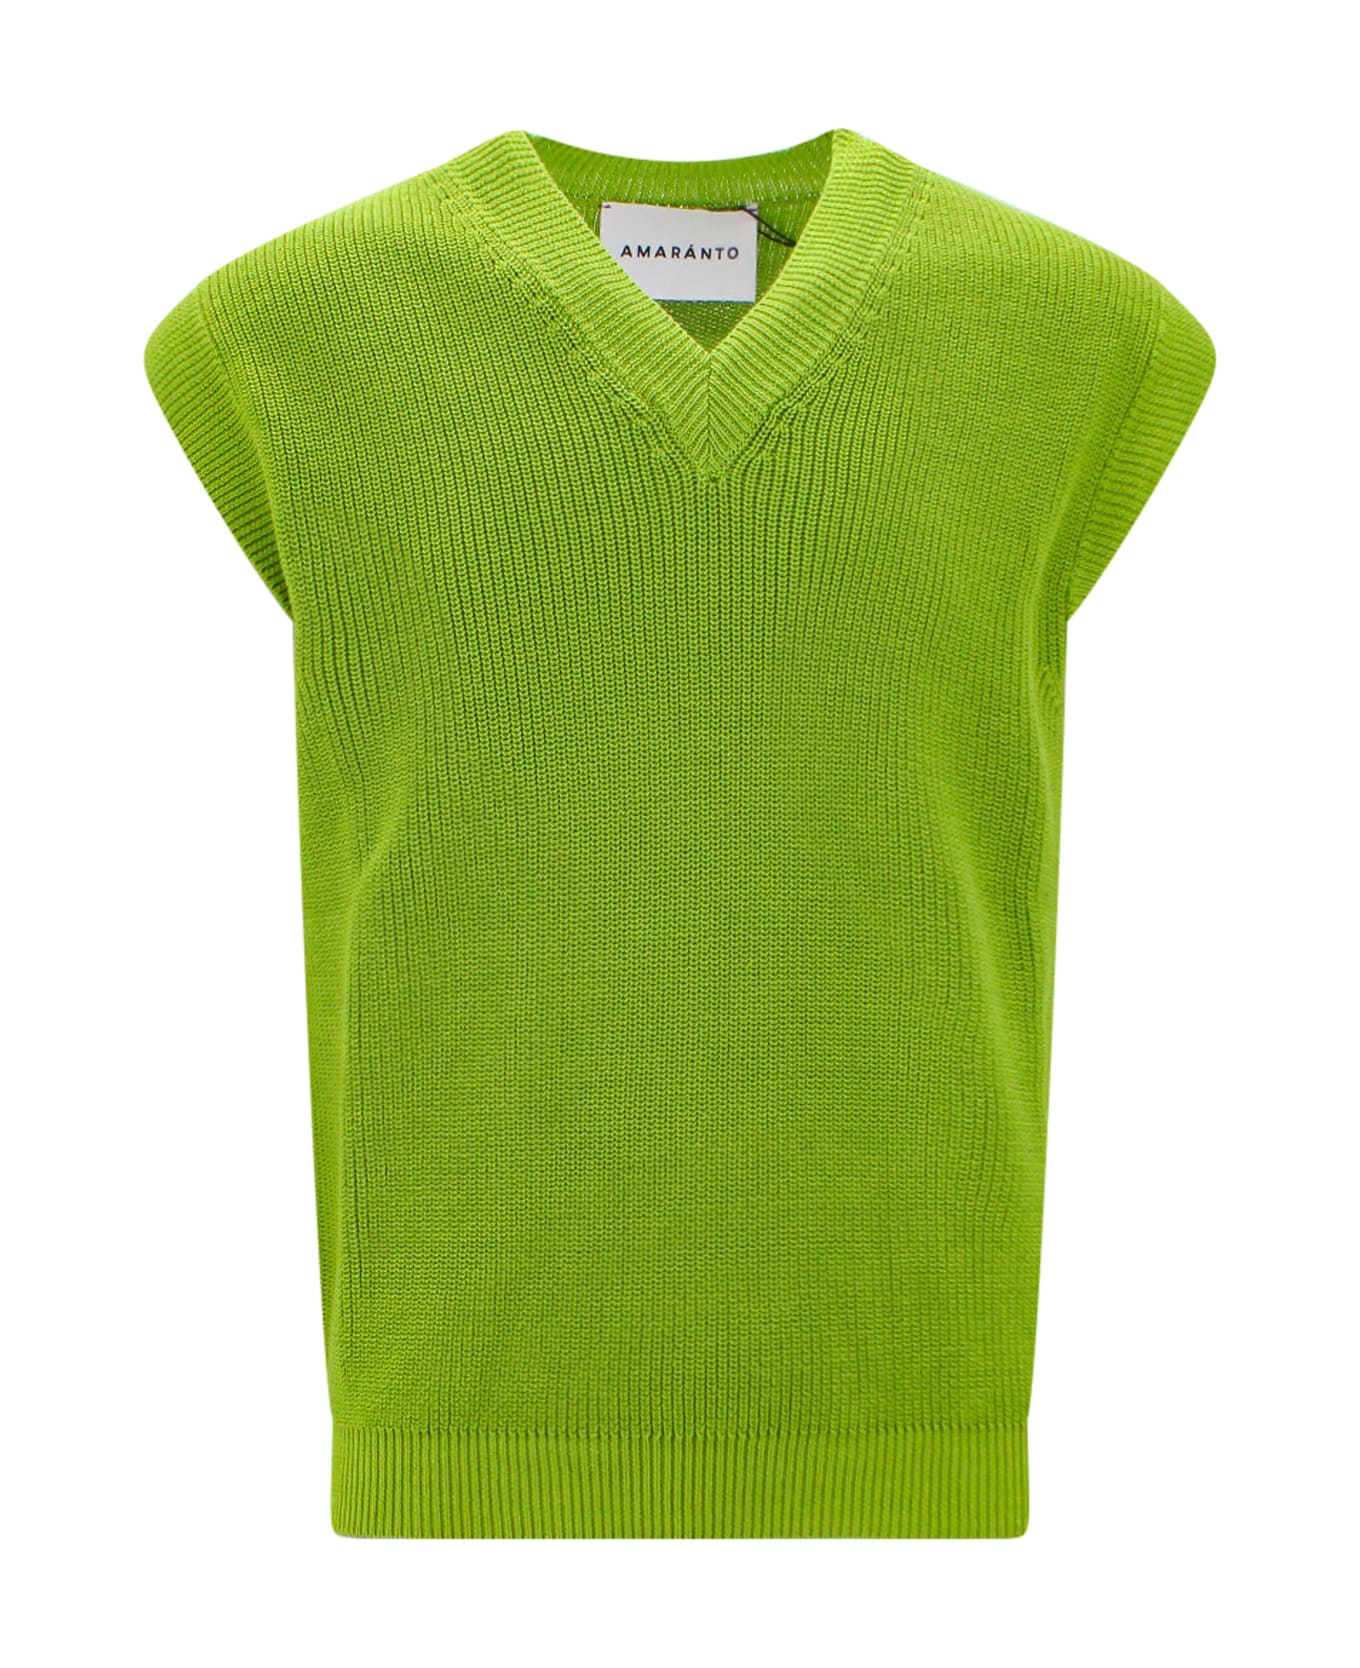 Amaranto Vest - Green